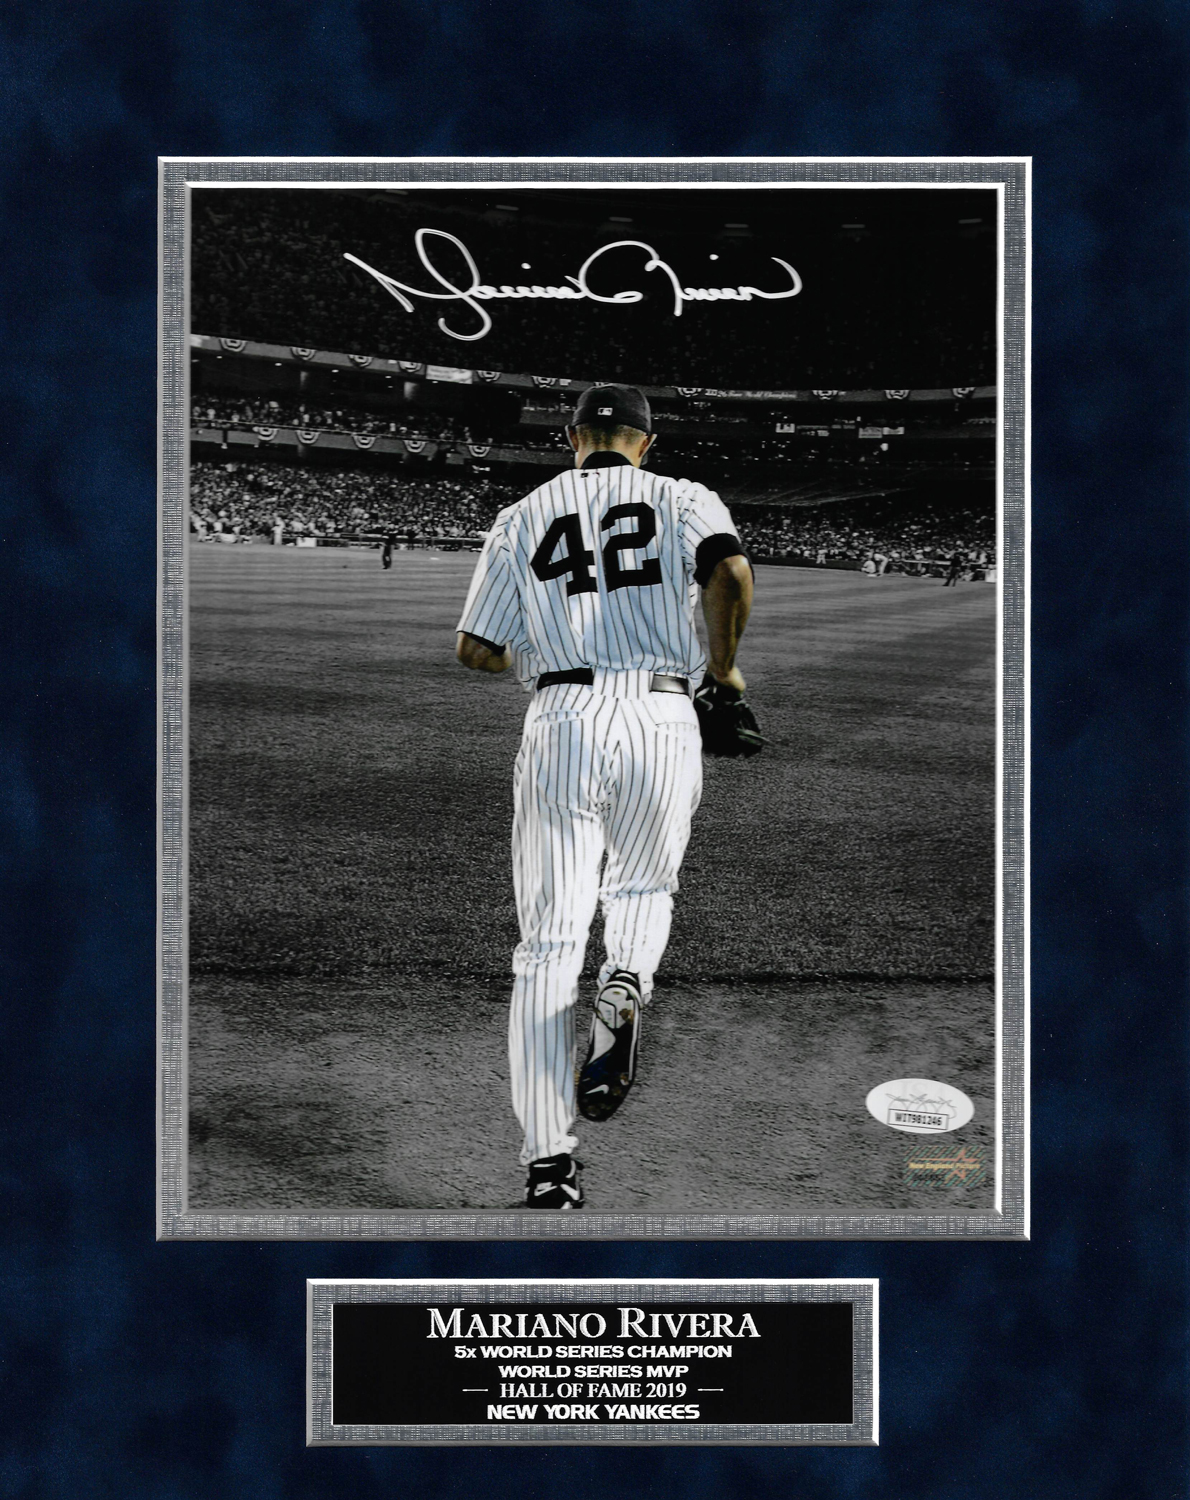 Mariano Rivera Autograph Photo Run On To Field Spotlight 11x14